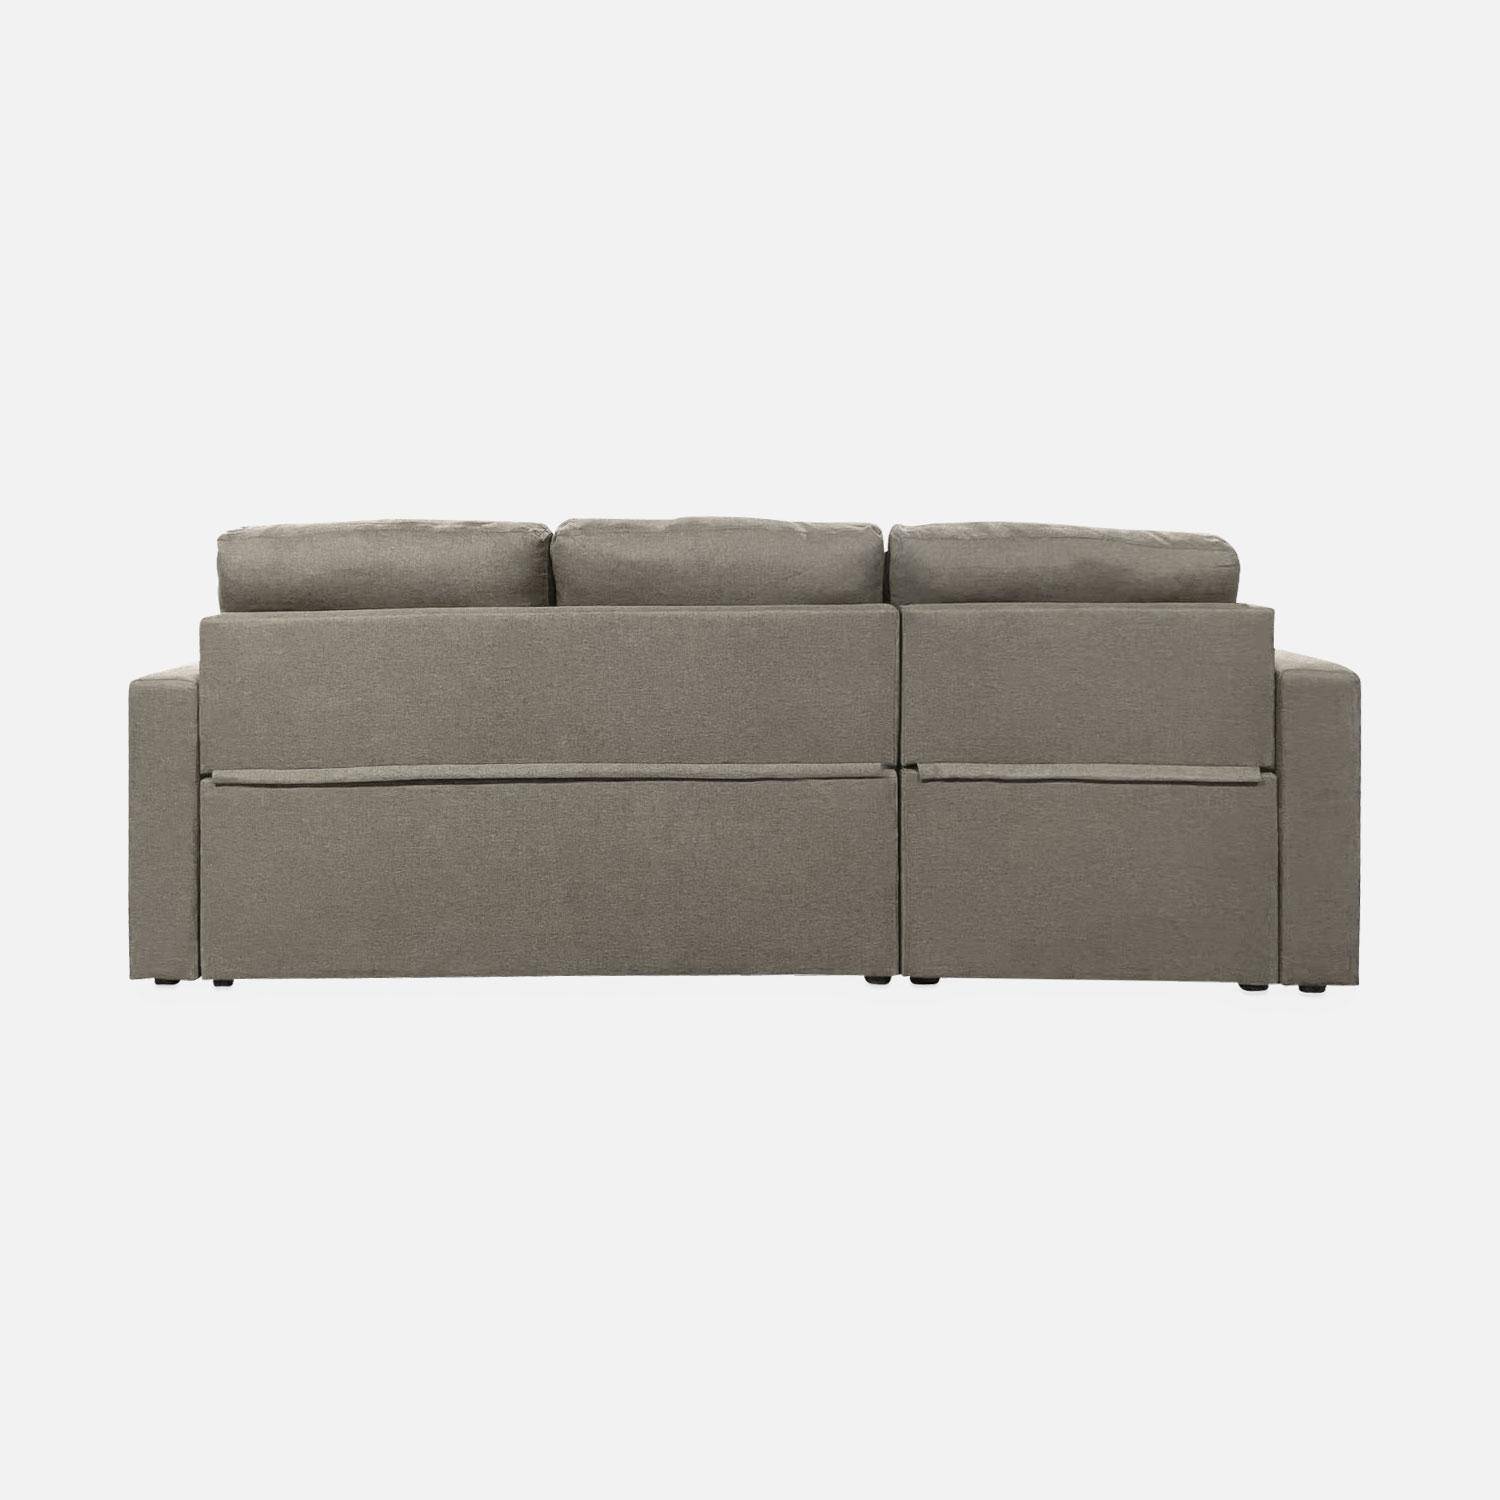 3-seater reversible brown corner sofa bed with storage box, brown, L219xD81xH68cm, IDA Photo6